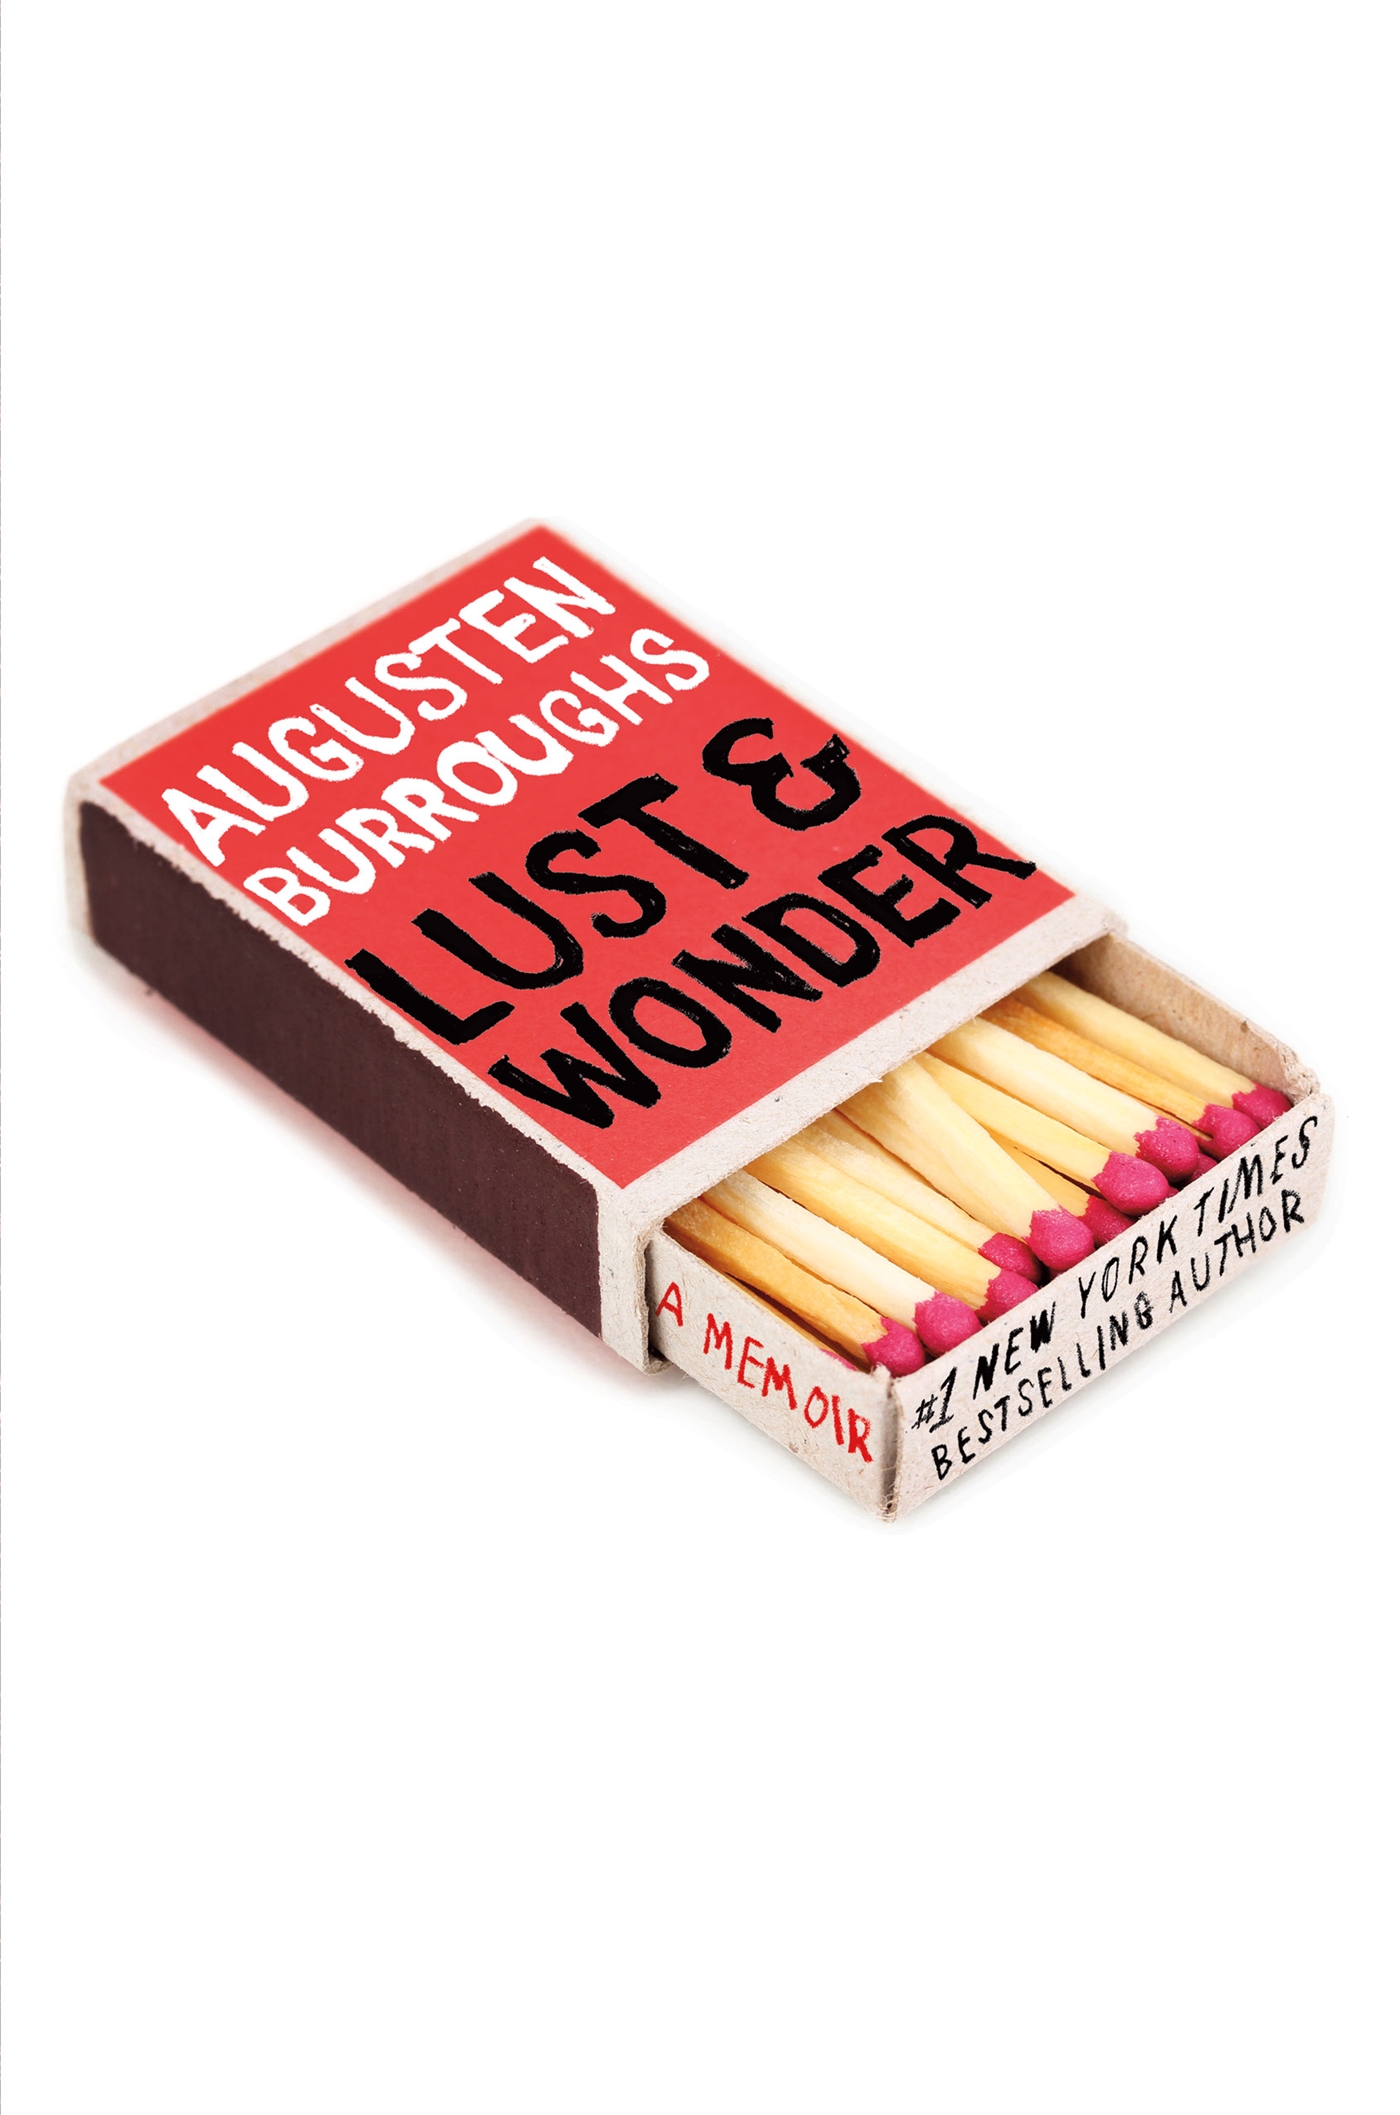 Lust & wonder cover image